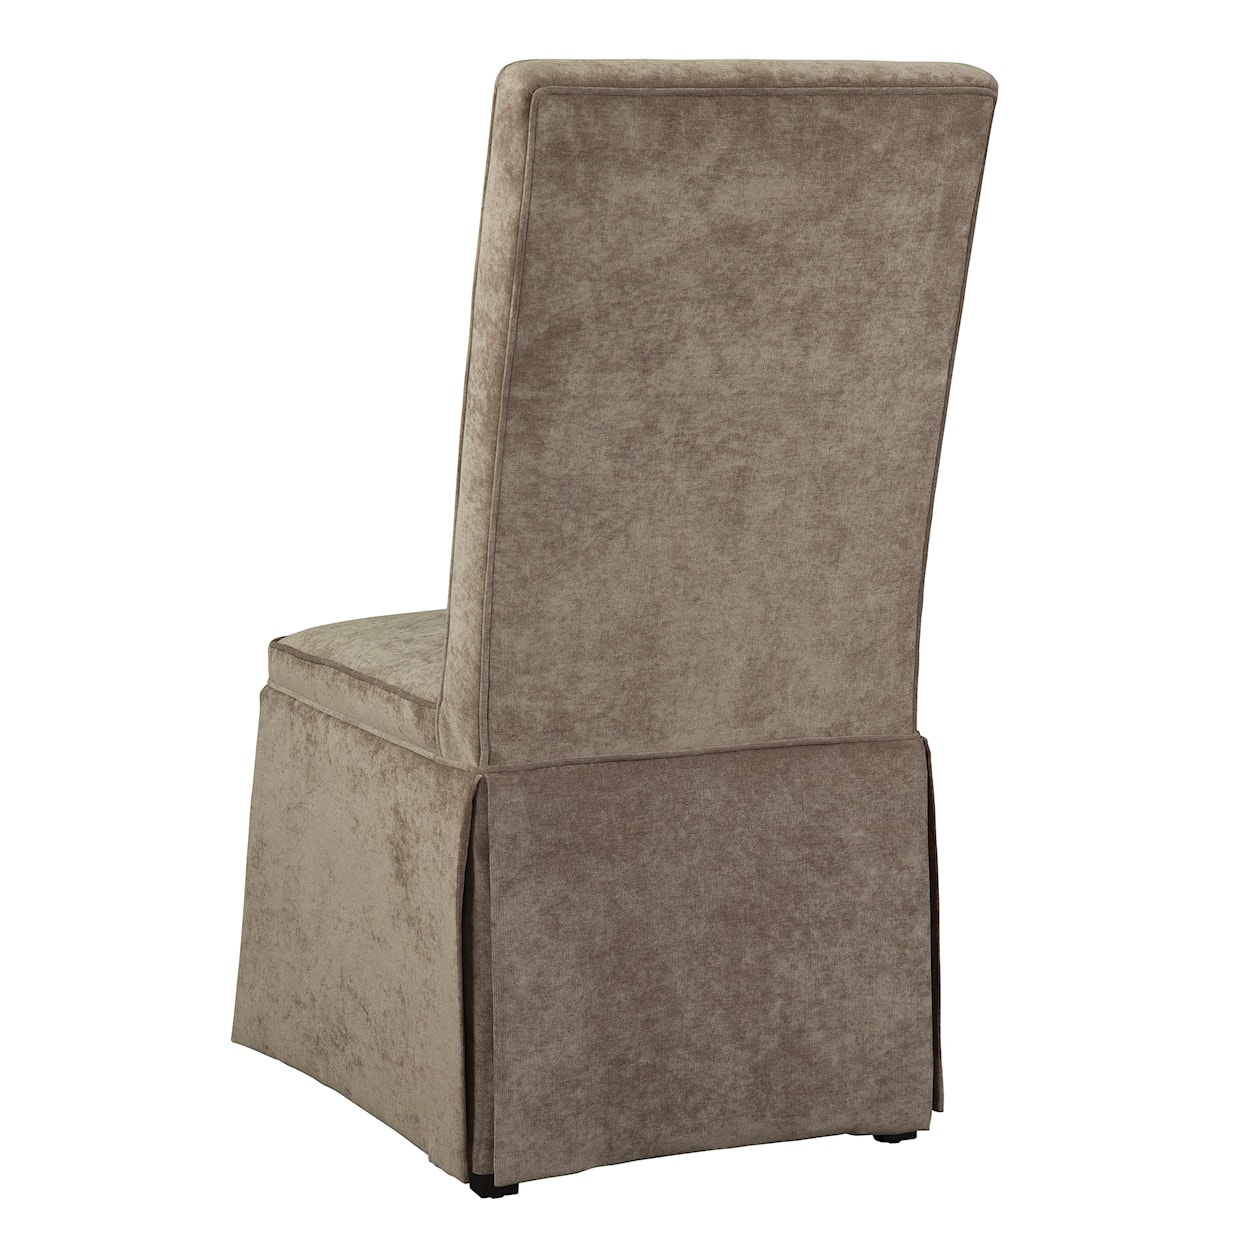 Hekman Upholstery Tara Dining Chair